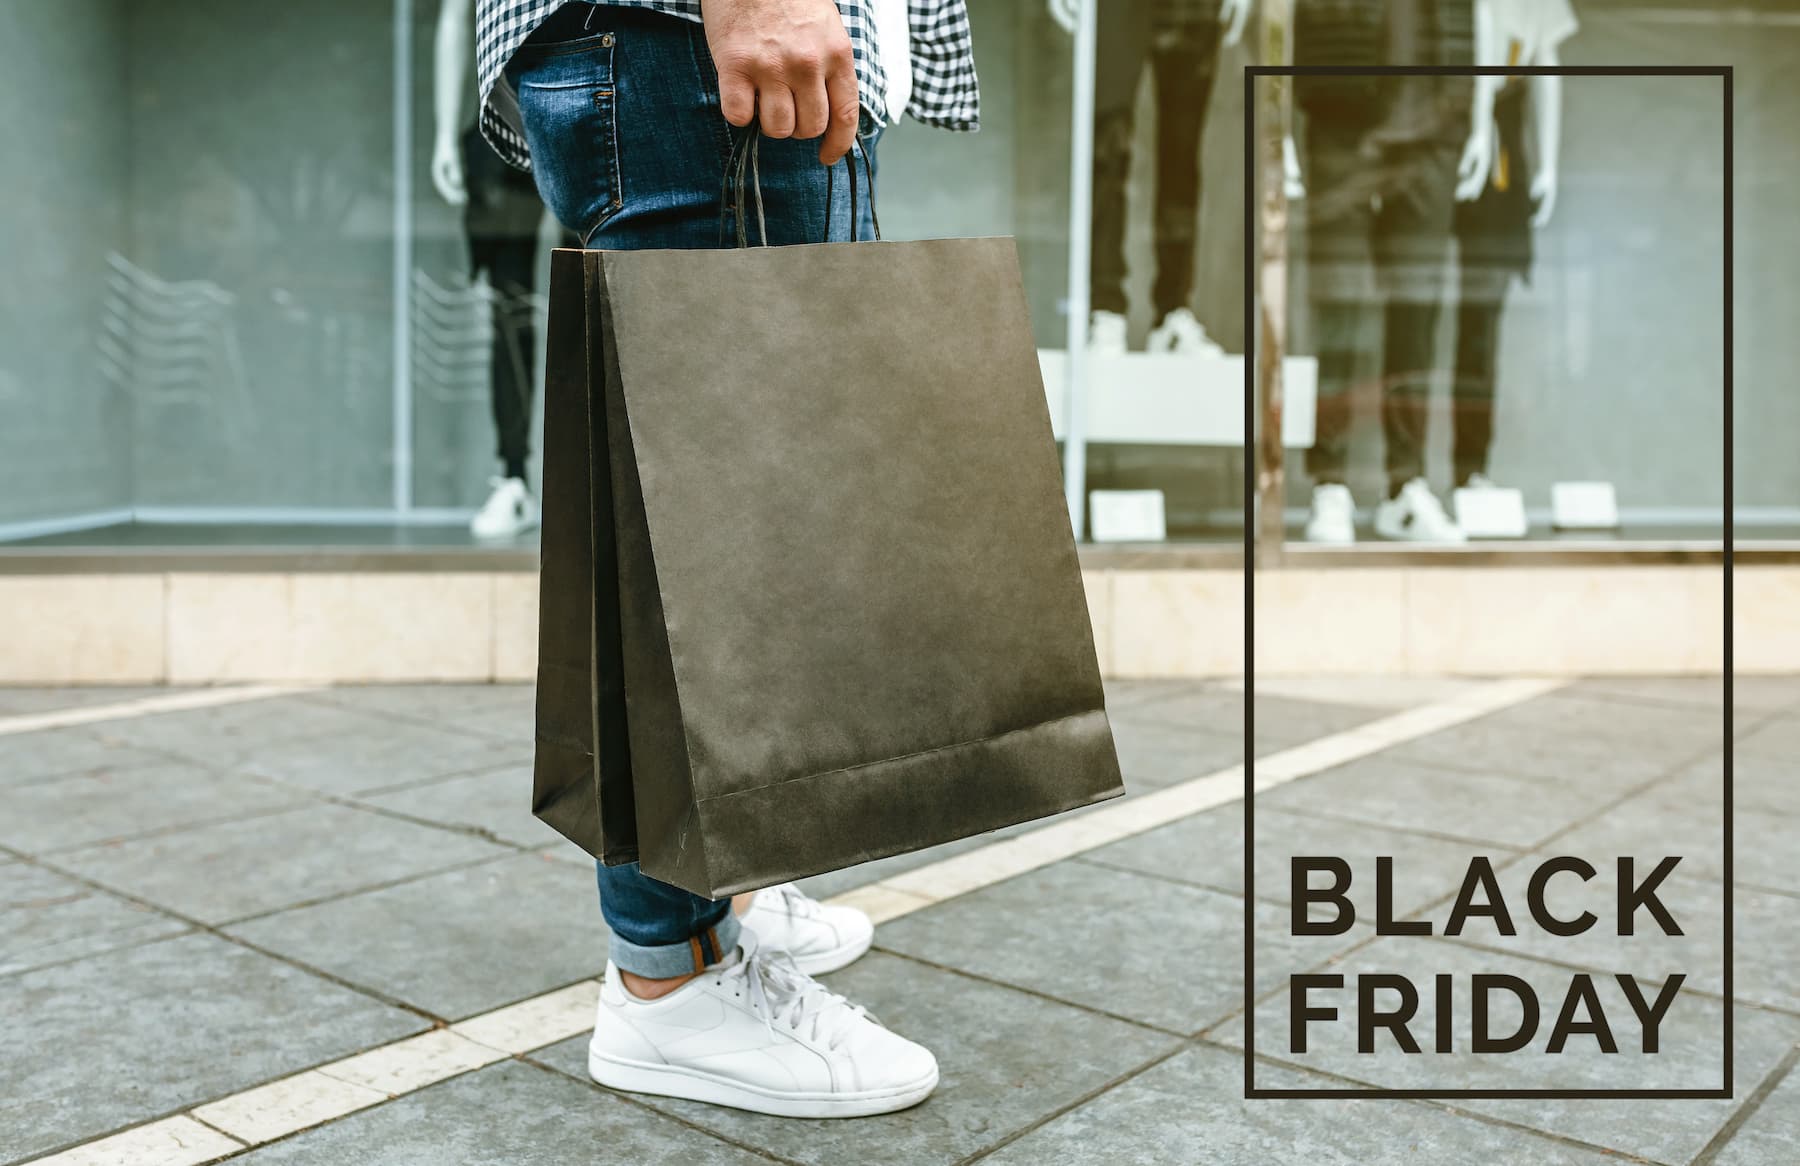 Sezonowy przegląd szafy: co warto kupić na Black Friday? 